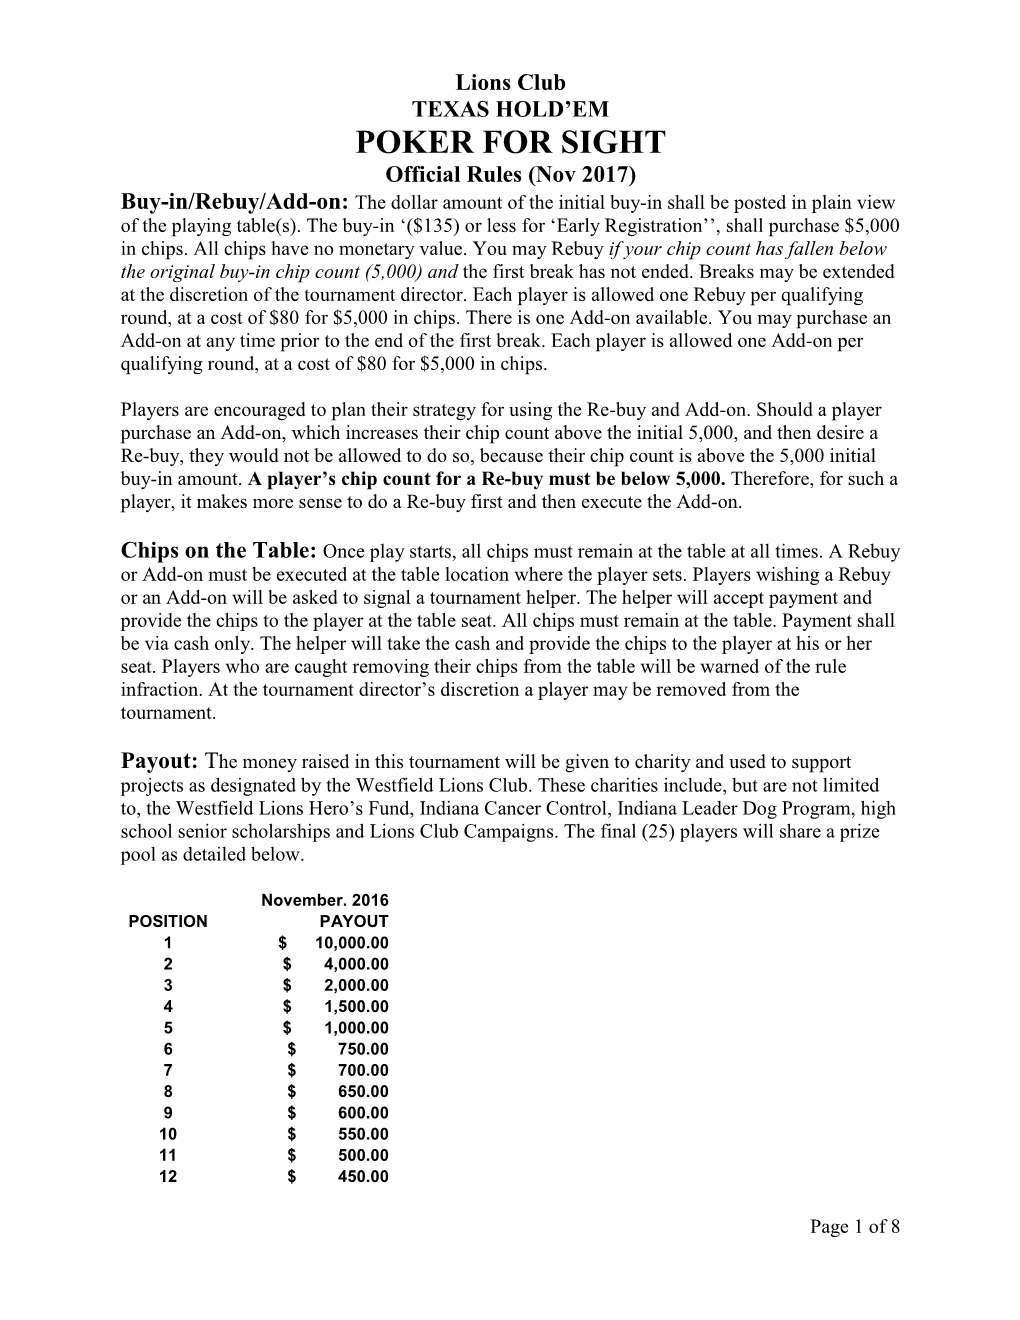 Lions Poker Full Rules (PDF)